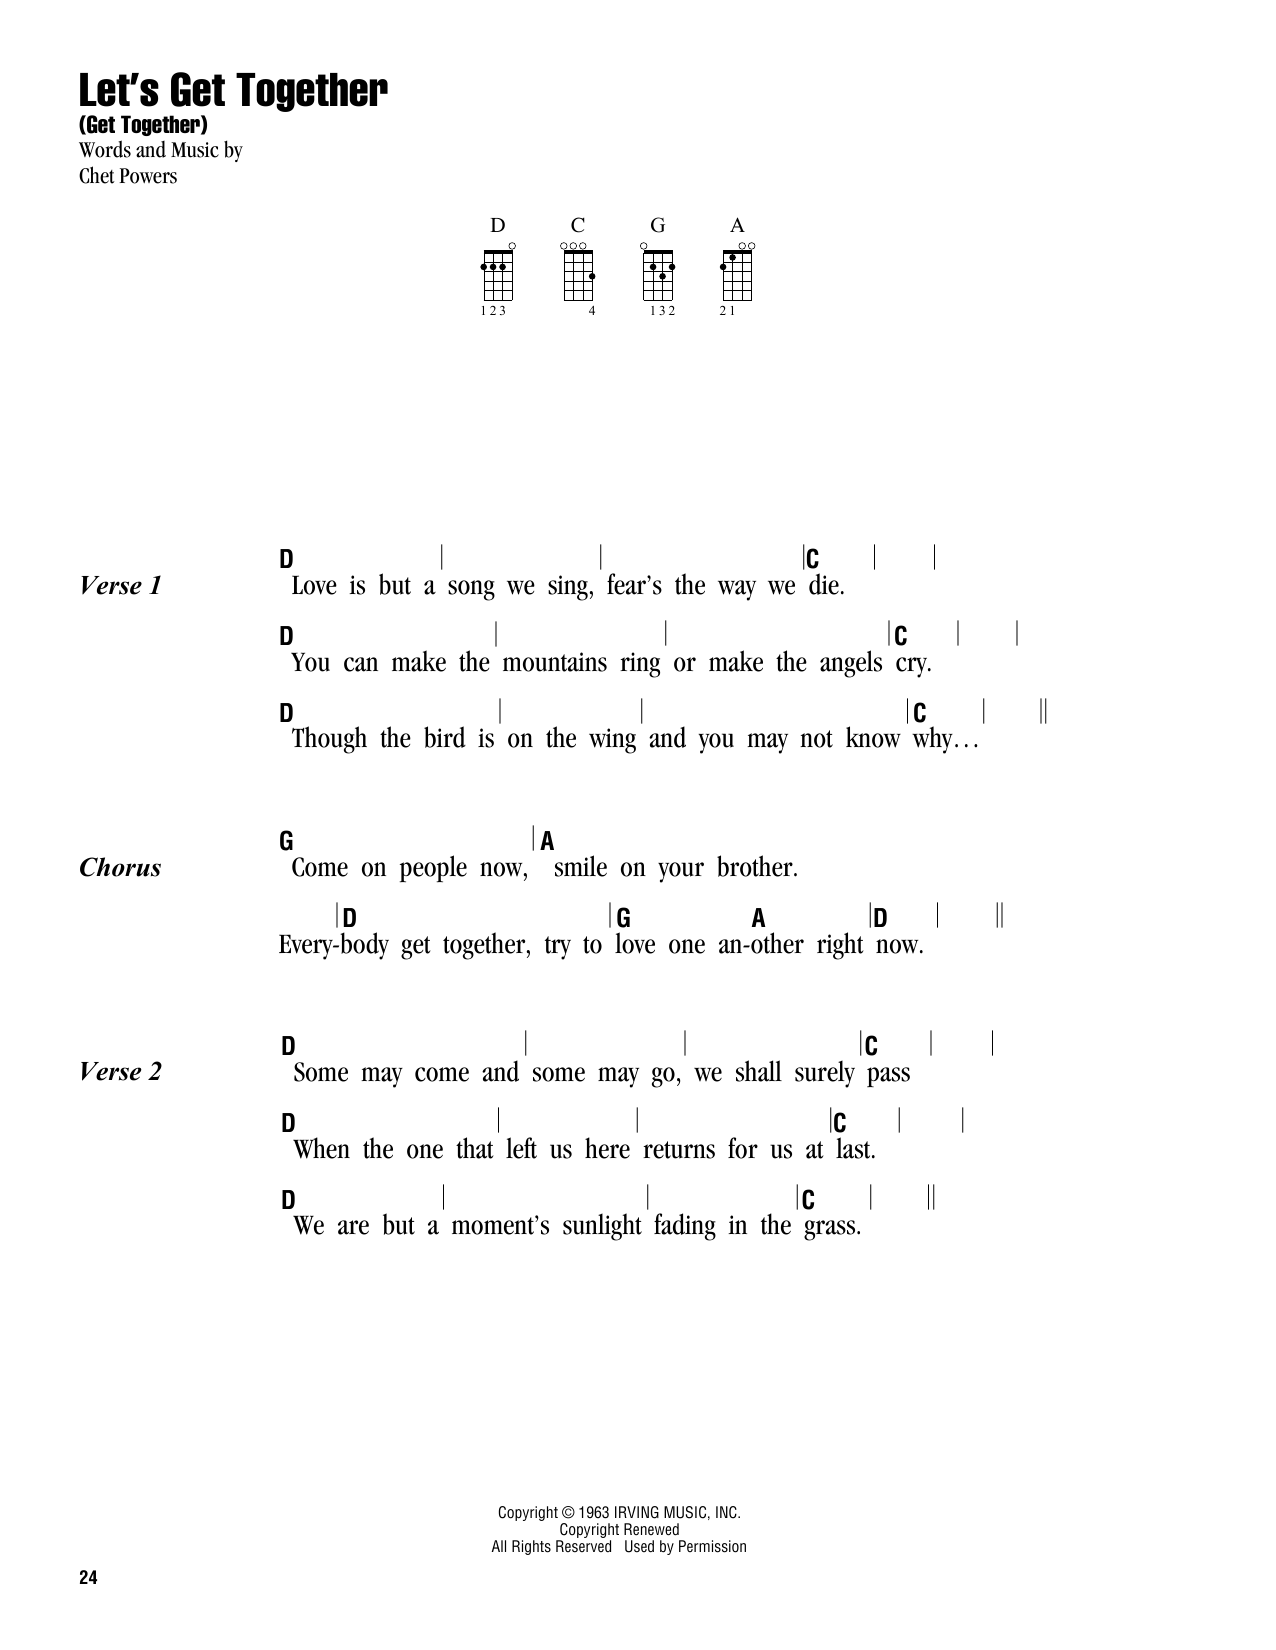 The Youngbloods Let's Get Together (Get Together) Sheet Music Notes & Chords for Ukulele with strumming patterns - Download or Print PDF